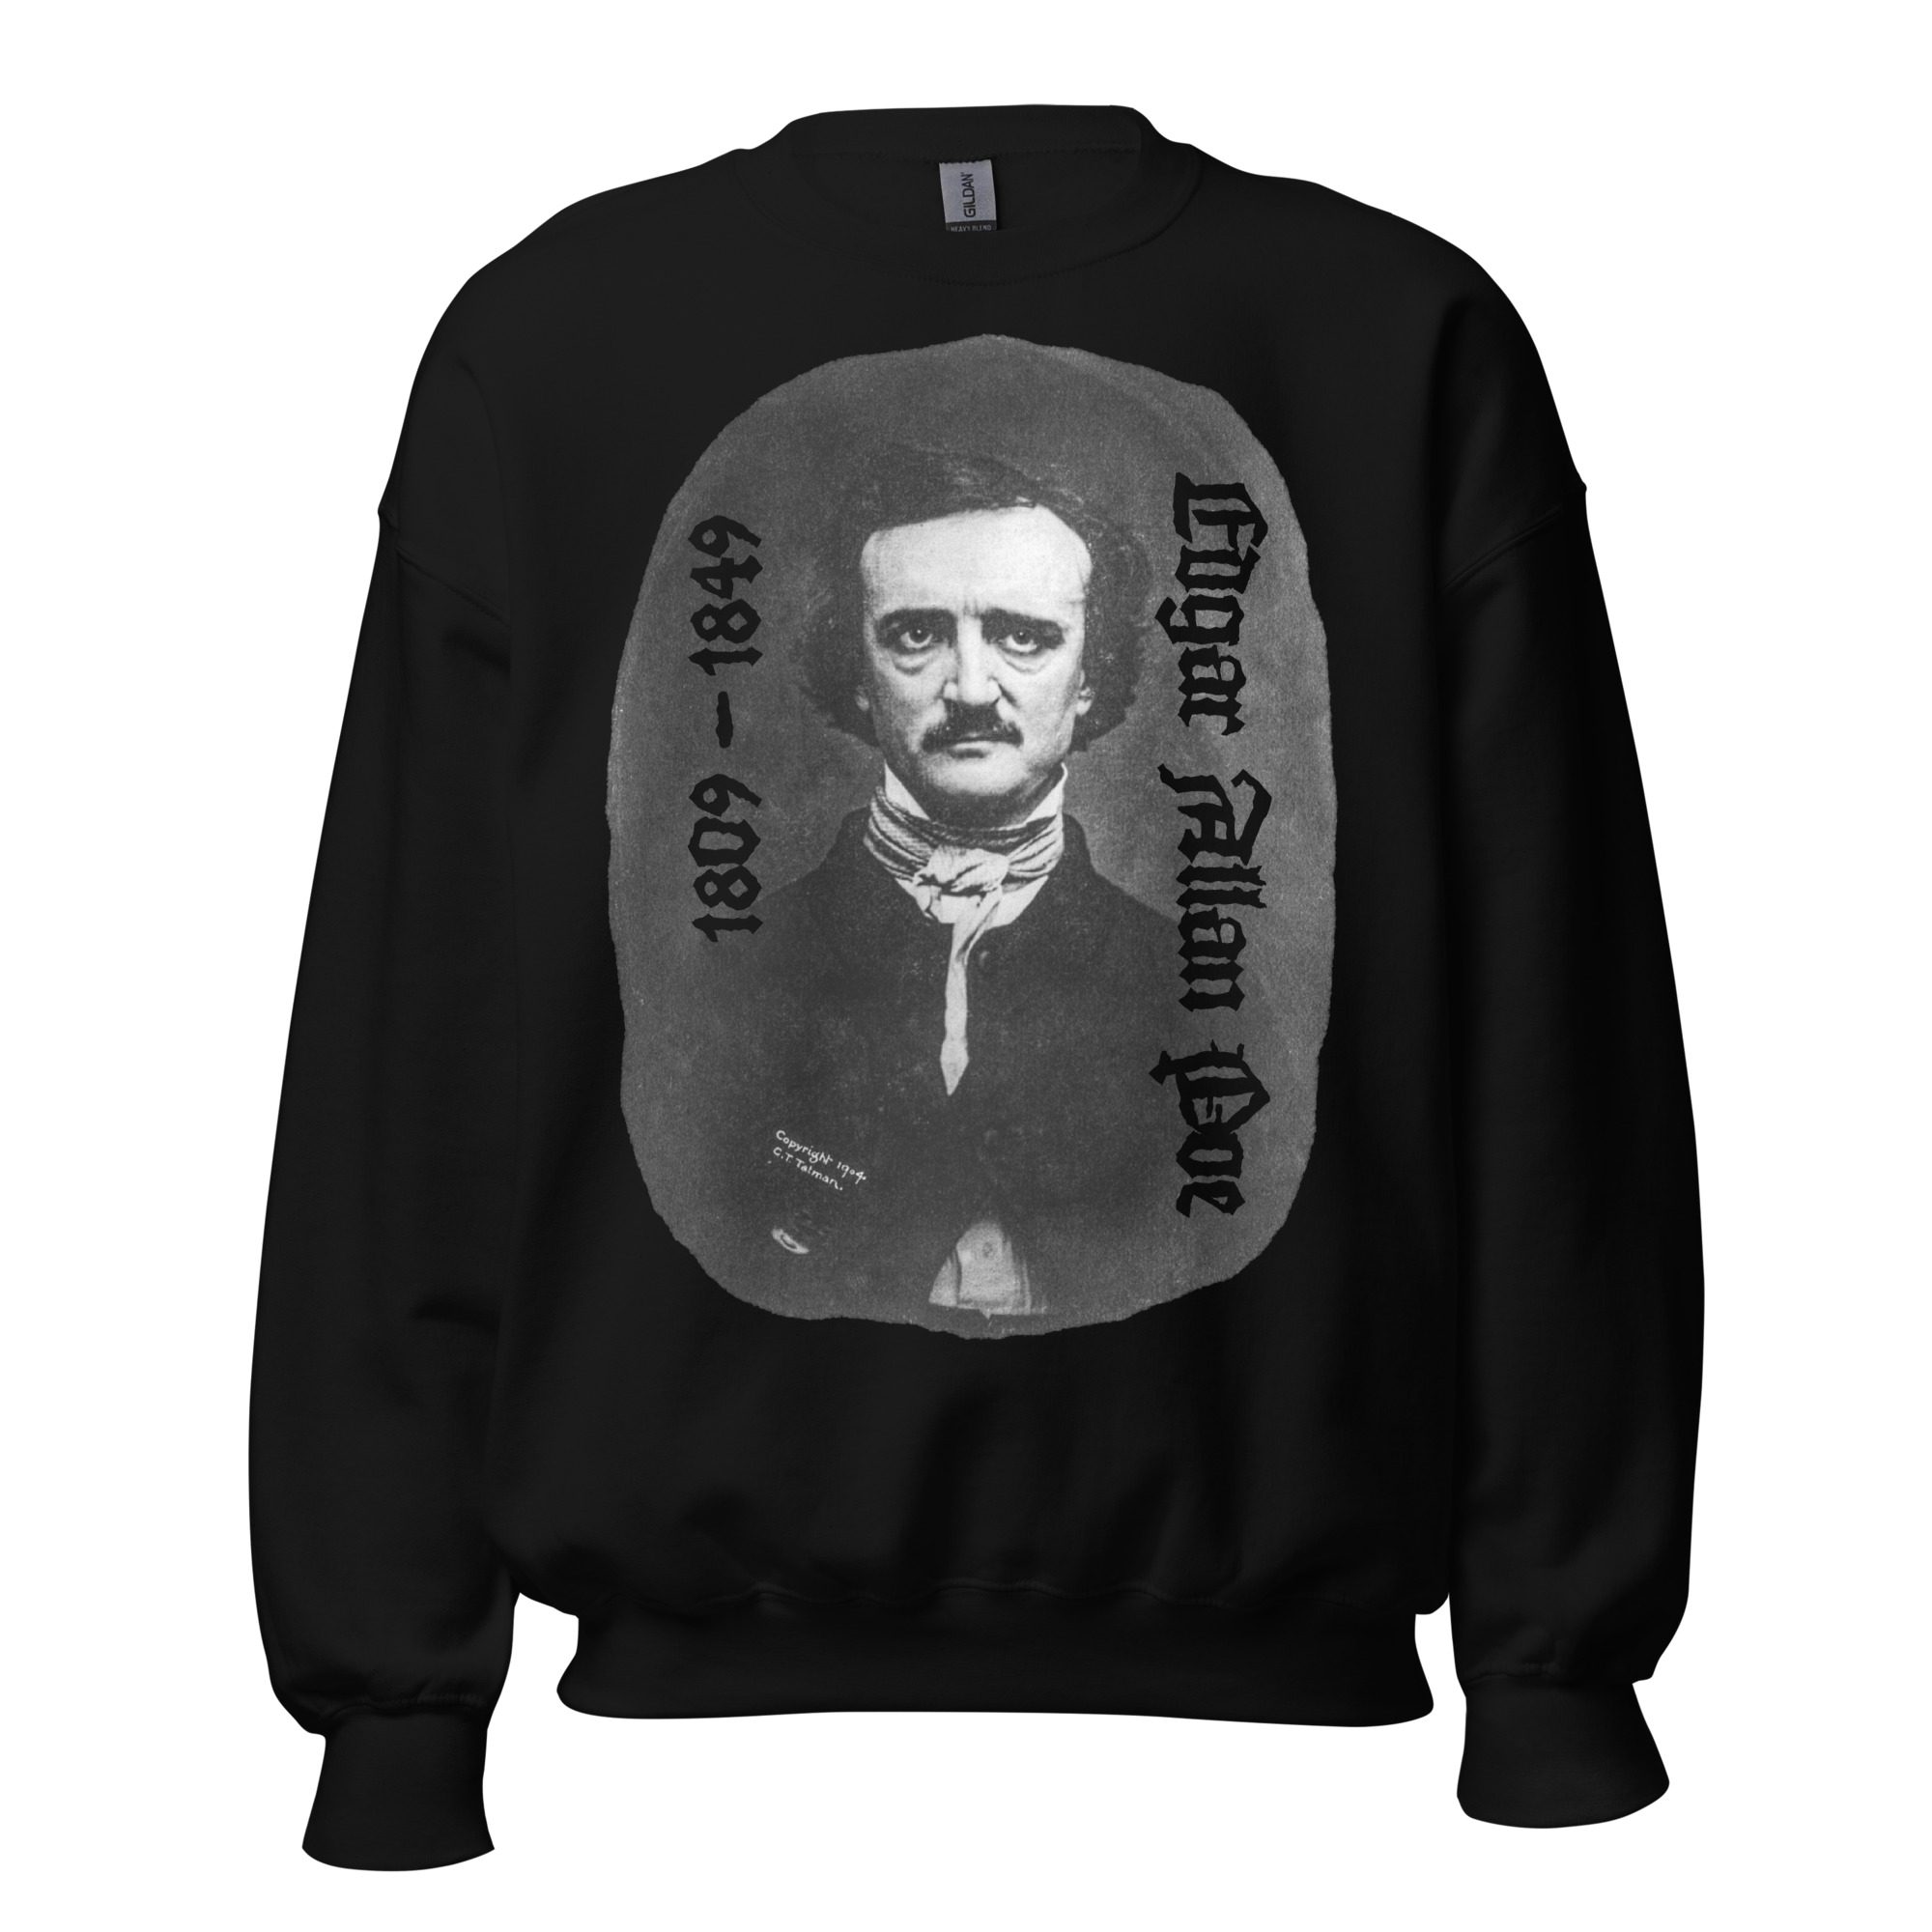 Featured image for “Edgar Allan Poe Portrait -  Unisex Gildan Sweatshirt”